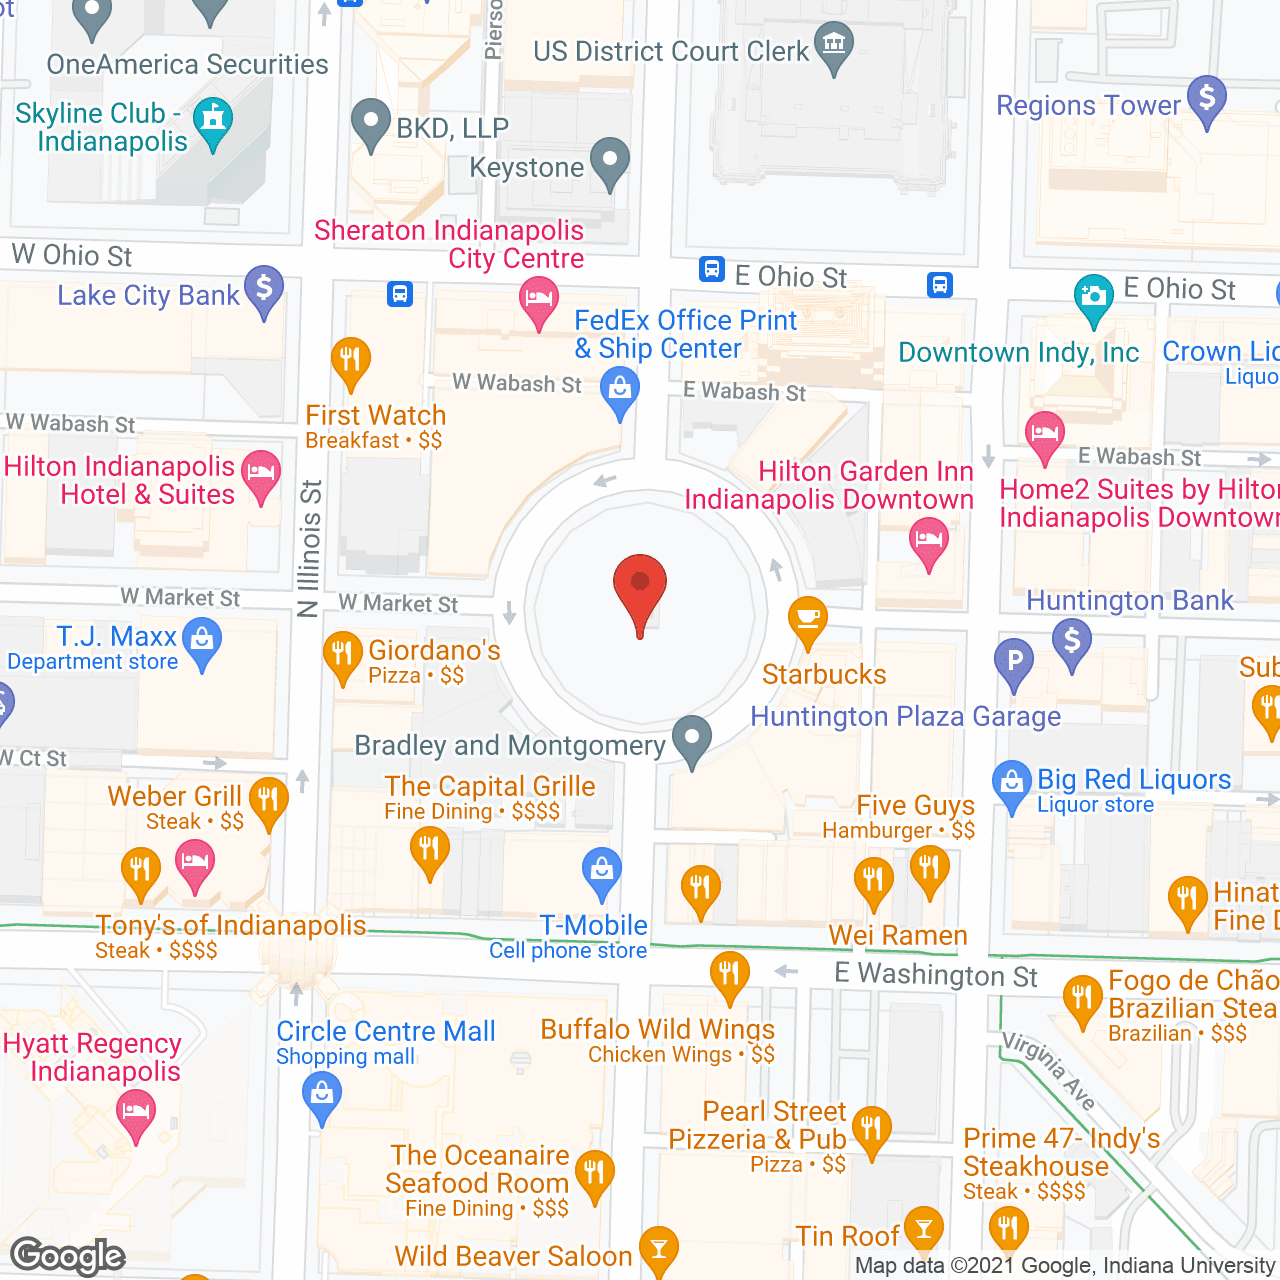 RoseBud Personal Agency in google map